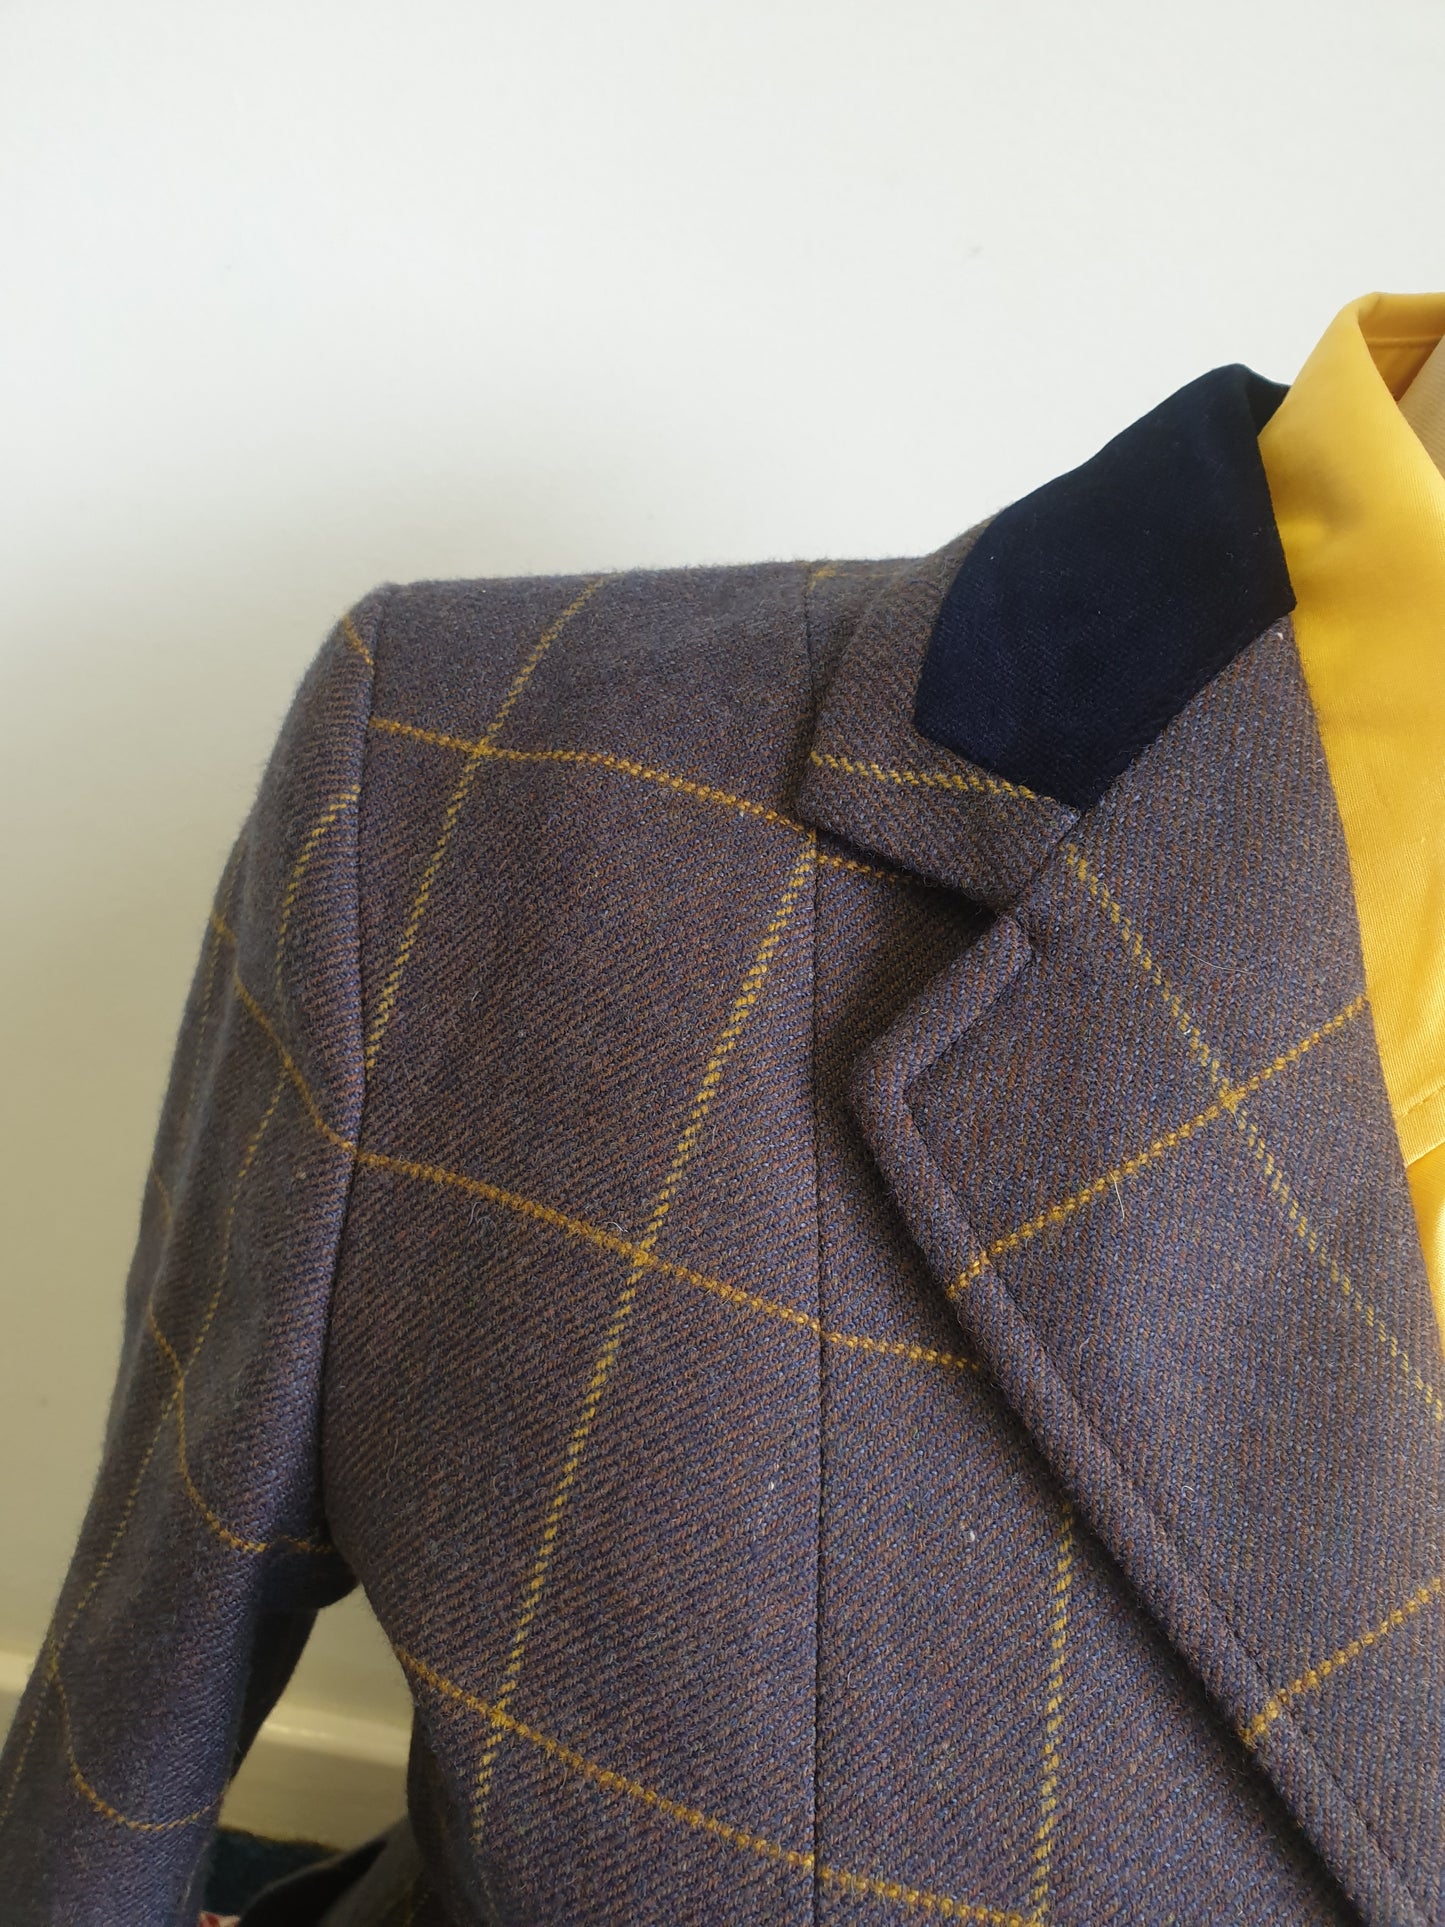 NEW caldene hickstead tweed jacket, size 12 (36"), violet FREE POSTAGE 🔵